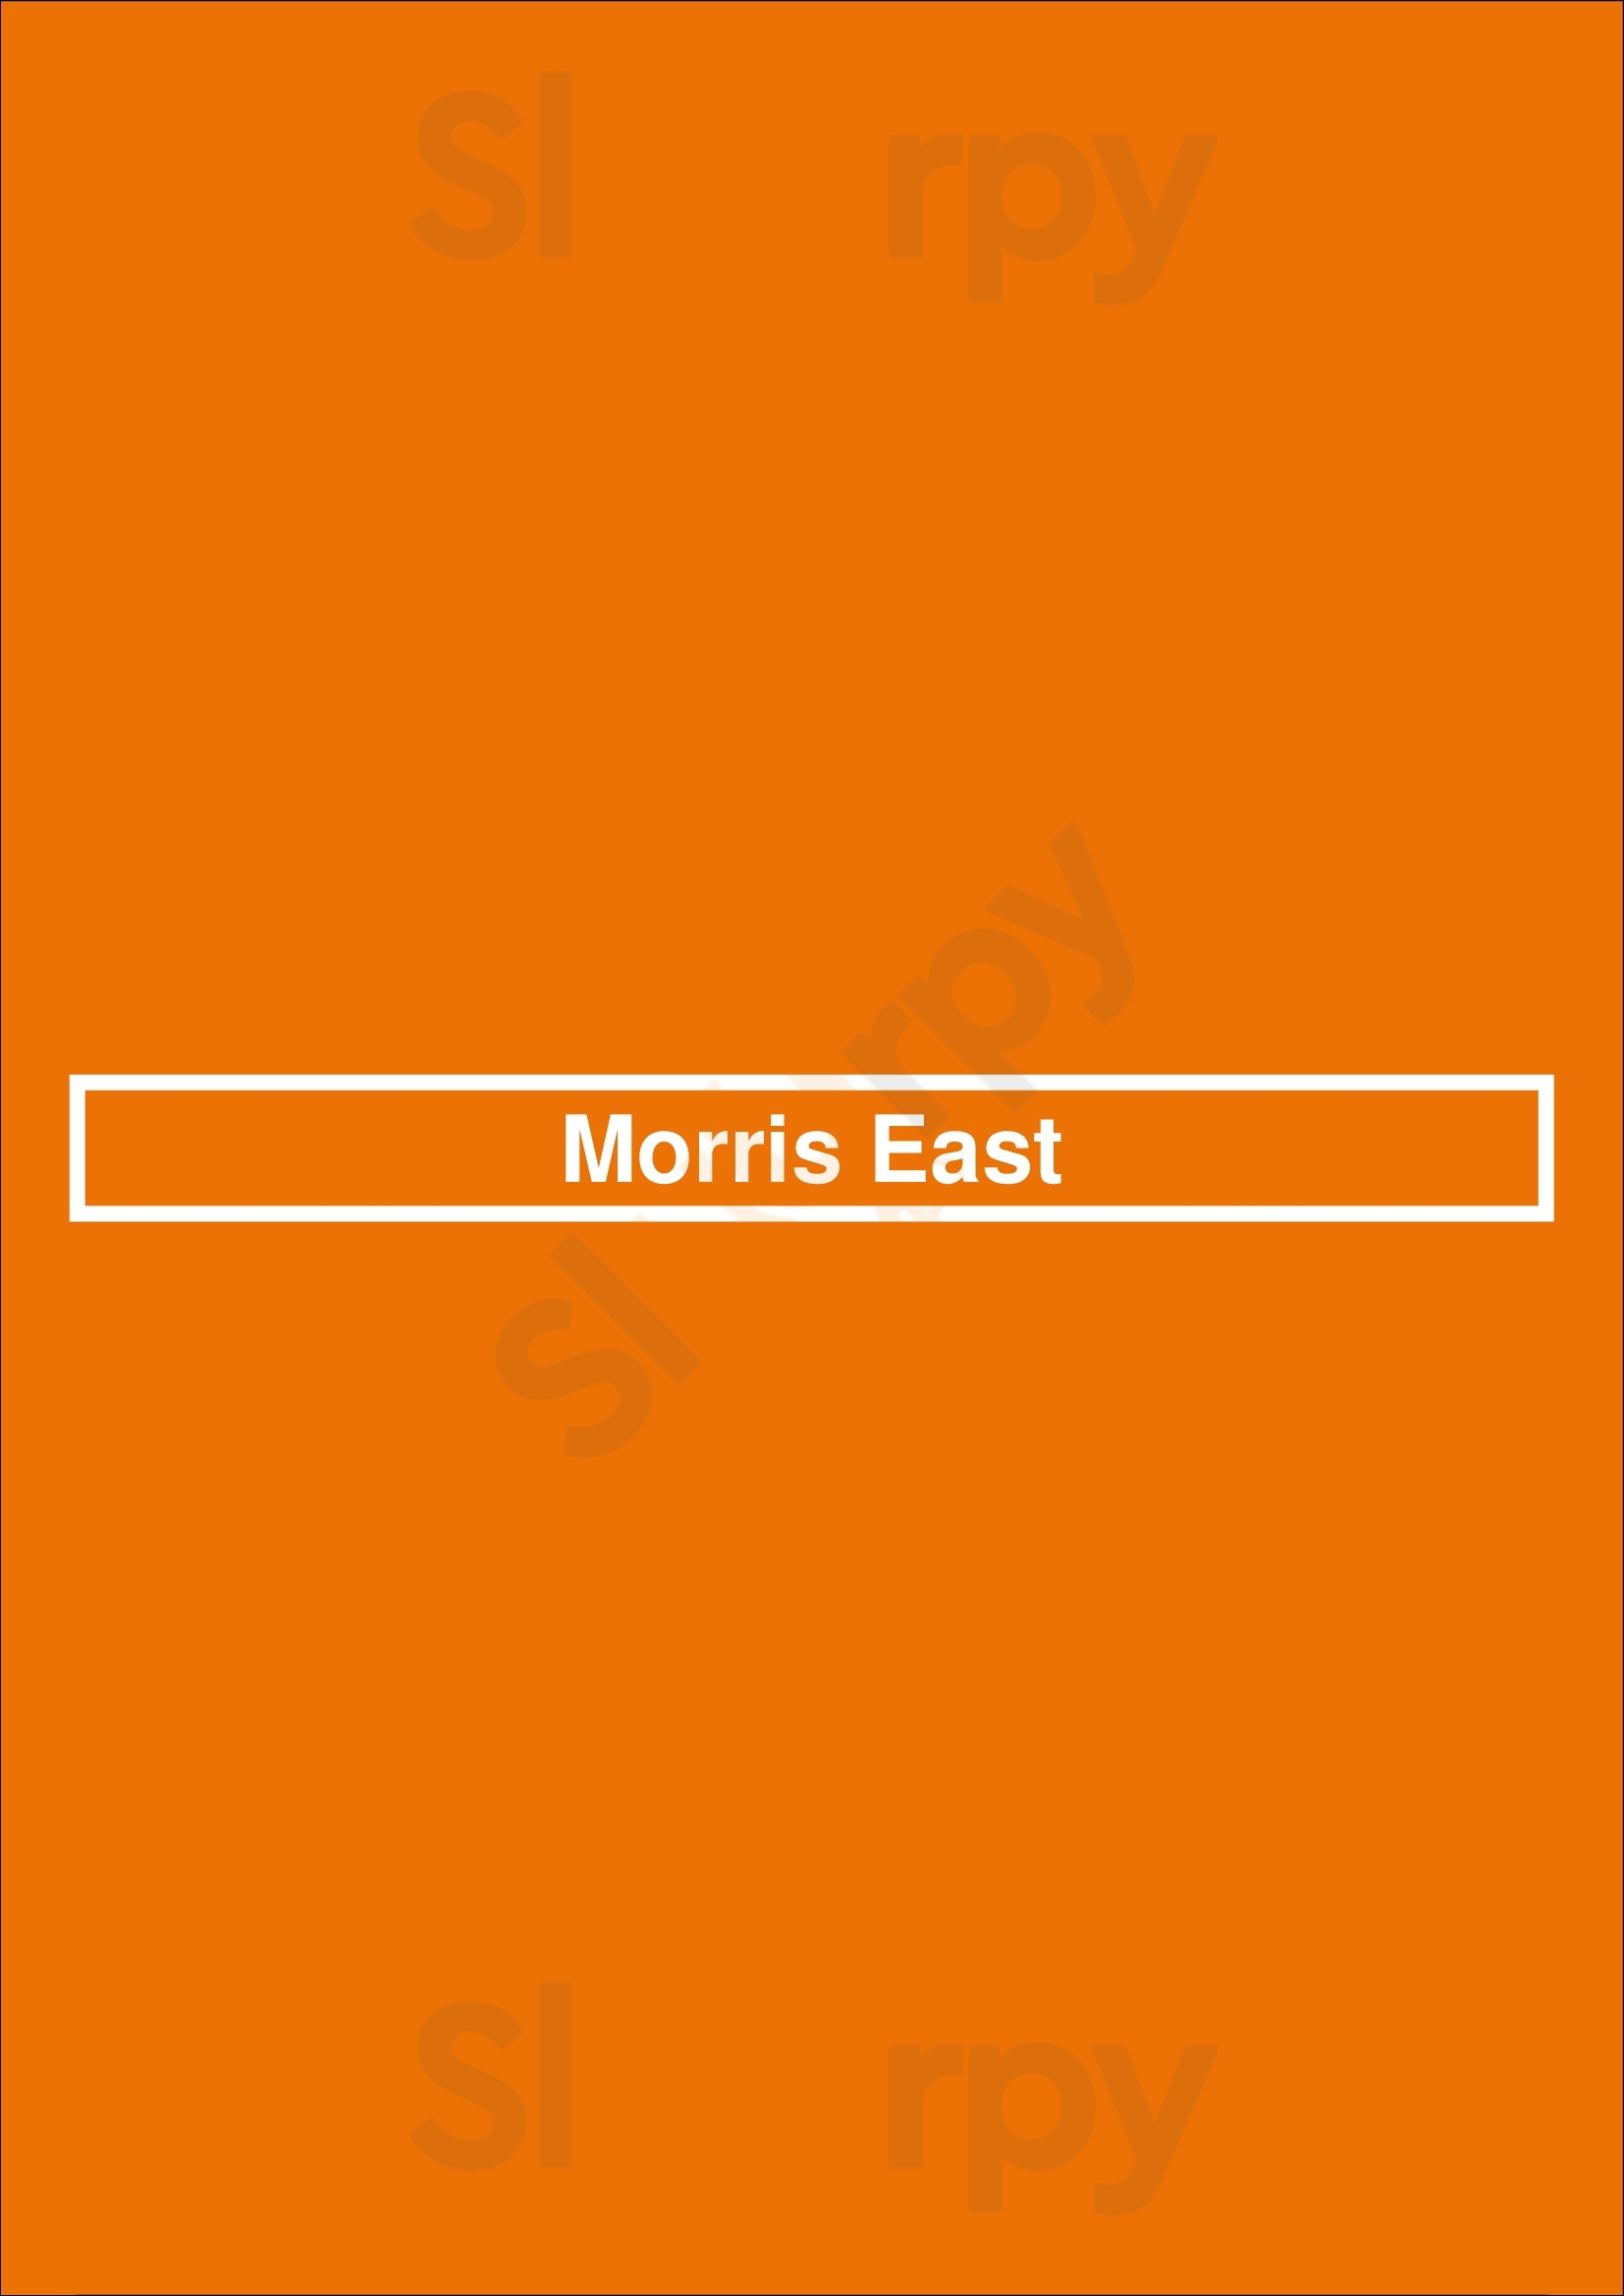 Morris East Halifax Menu - 1